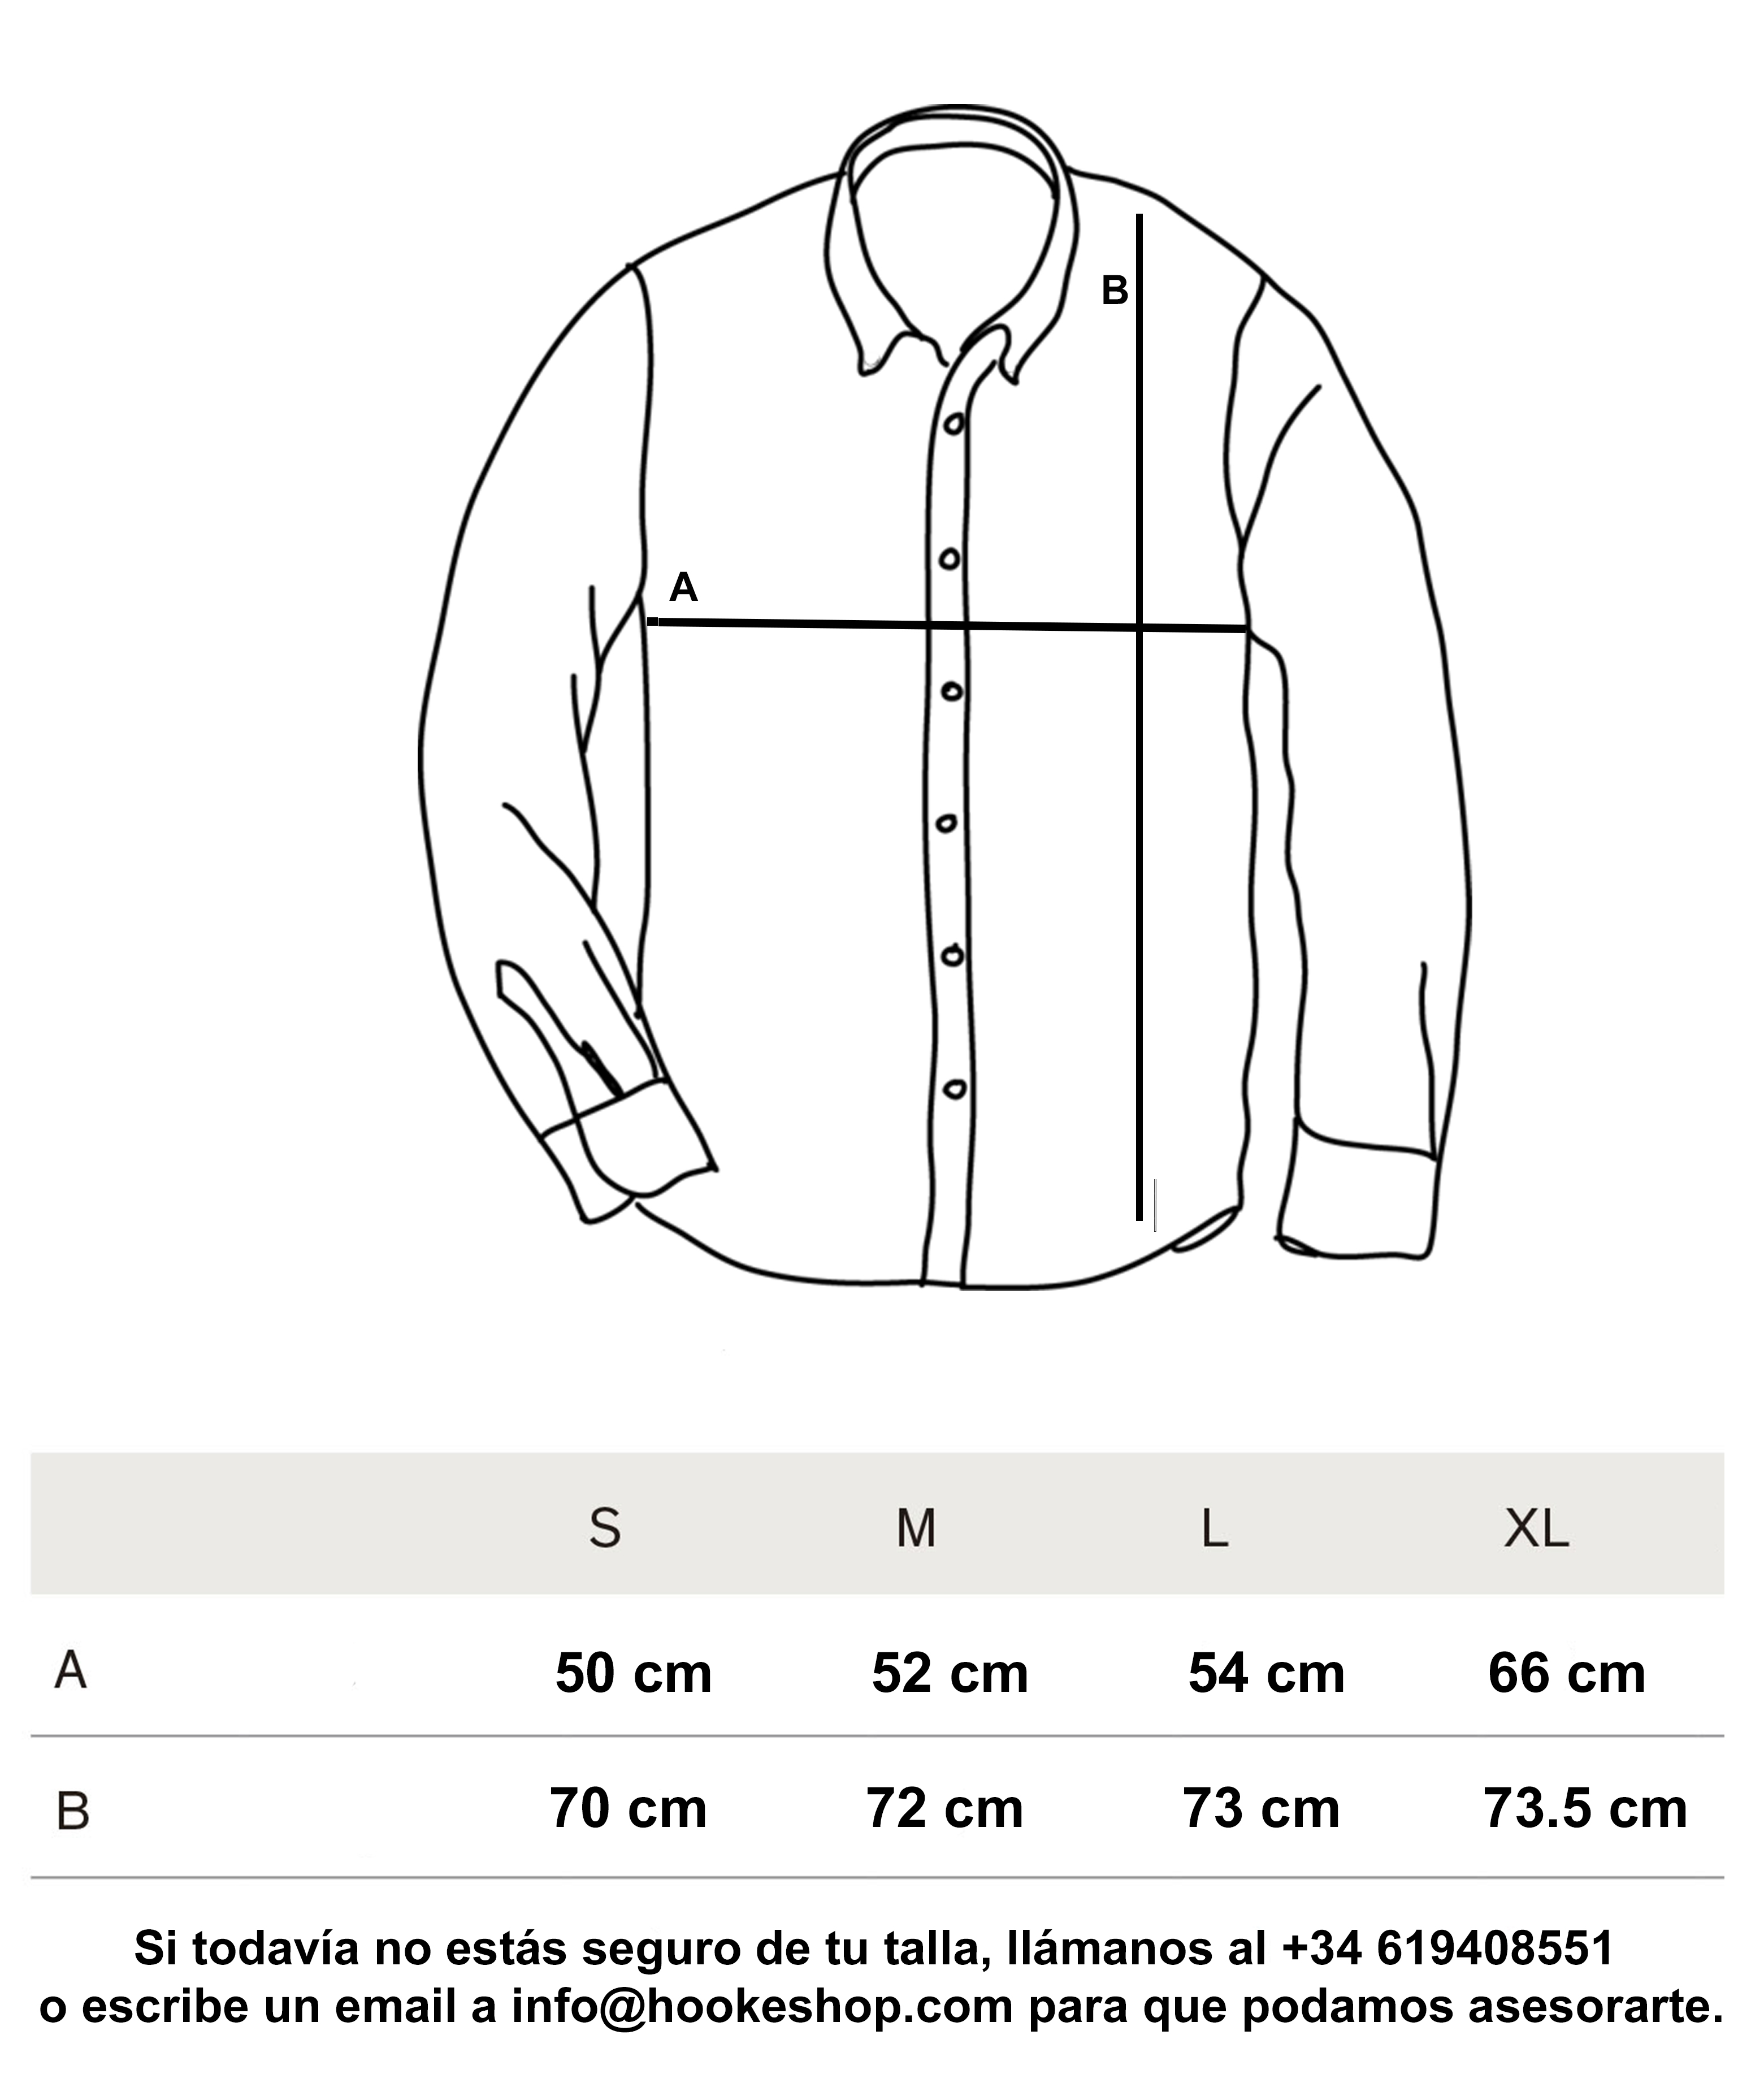 Shirt Size Guide 2019